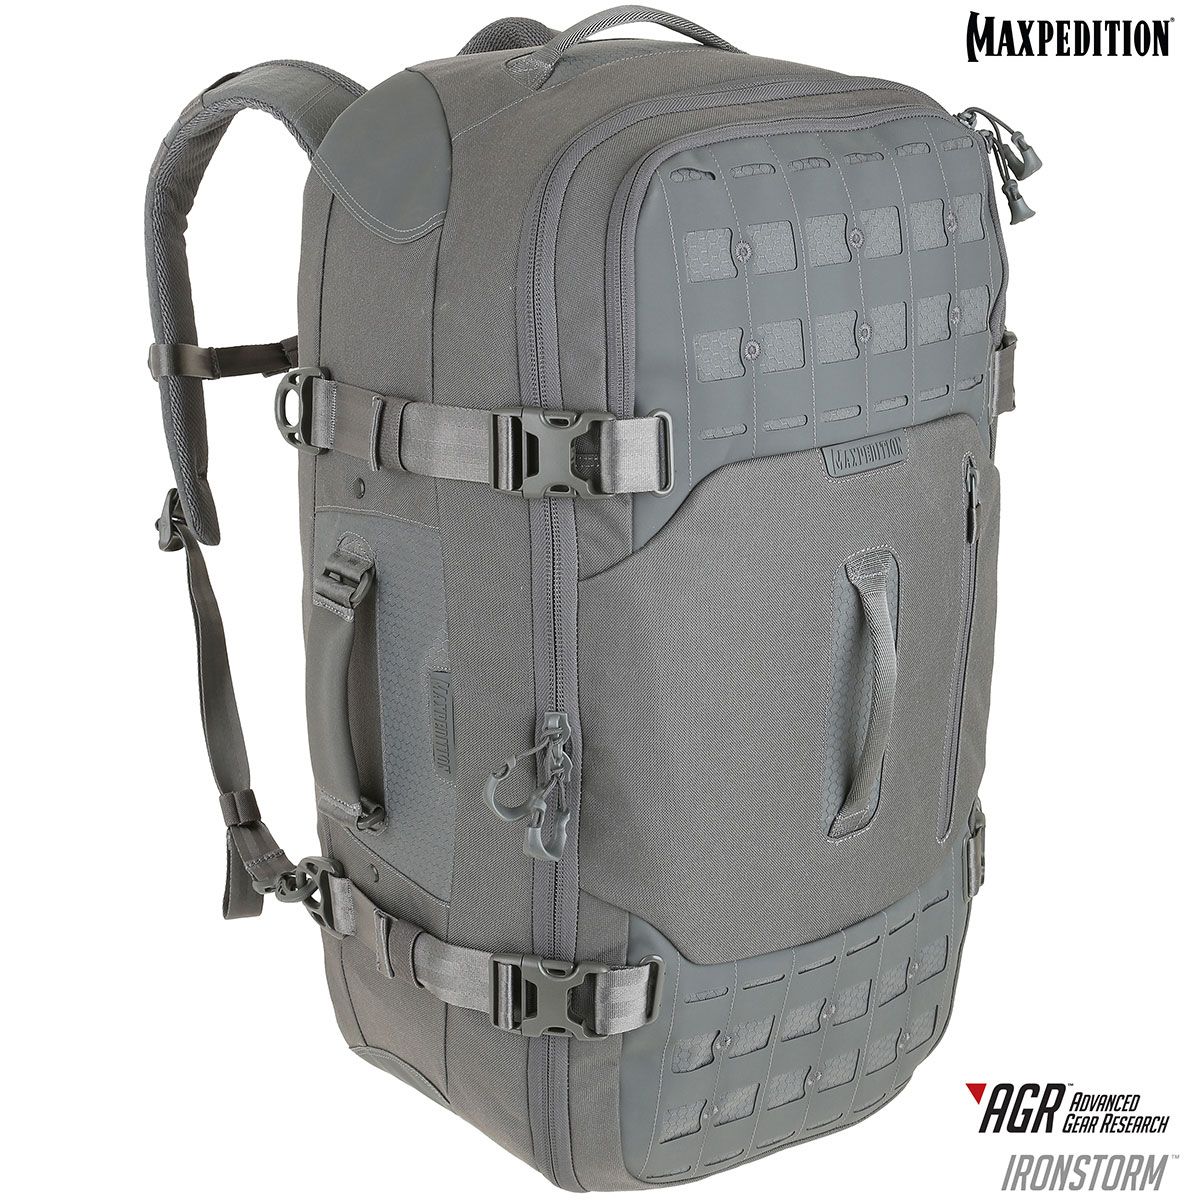 RCDBLK for sale online Maxpedition 48L Ironcloud Adventure Travel Bag Black 